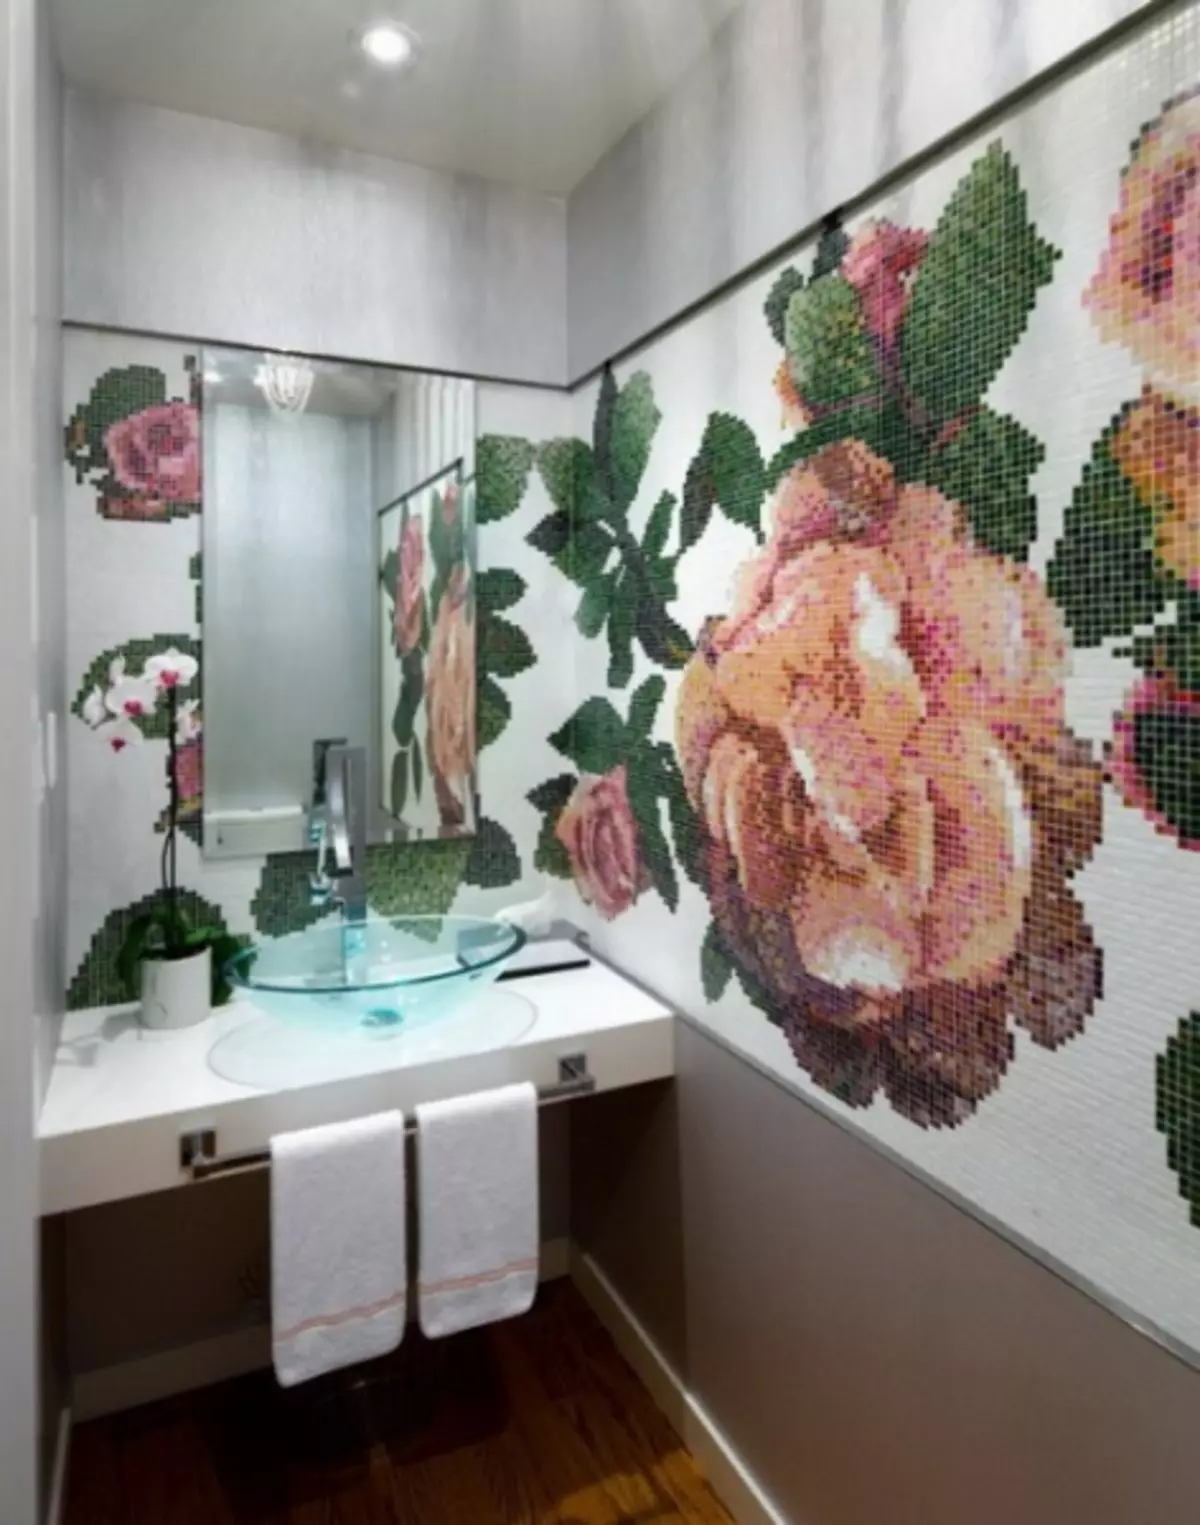 Mosaic in the interior decor - ideas, tips, use options (45 photos)